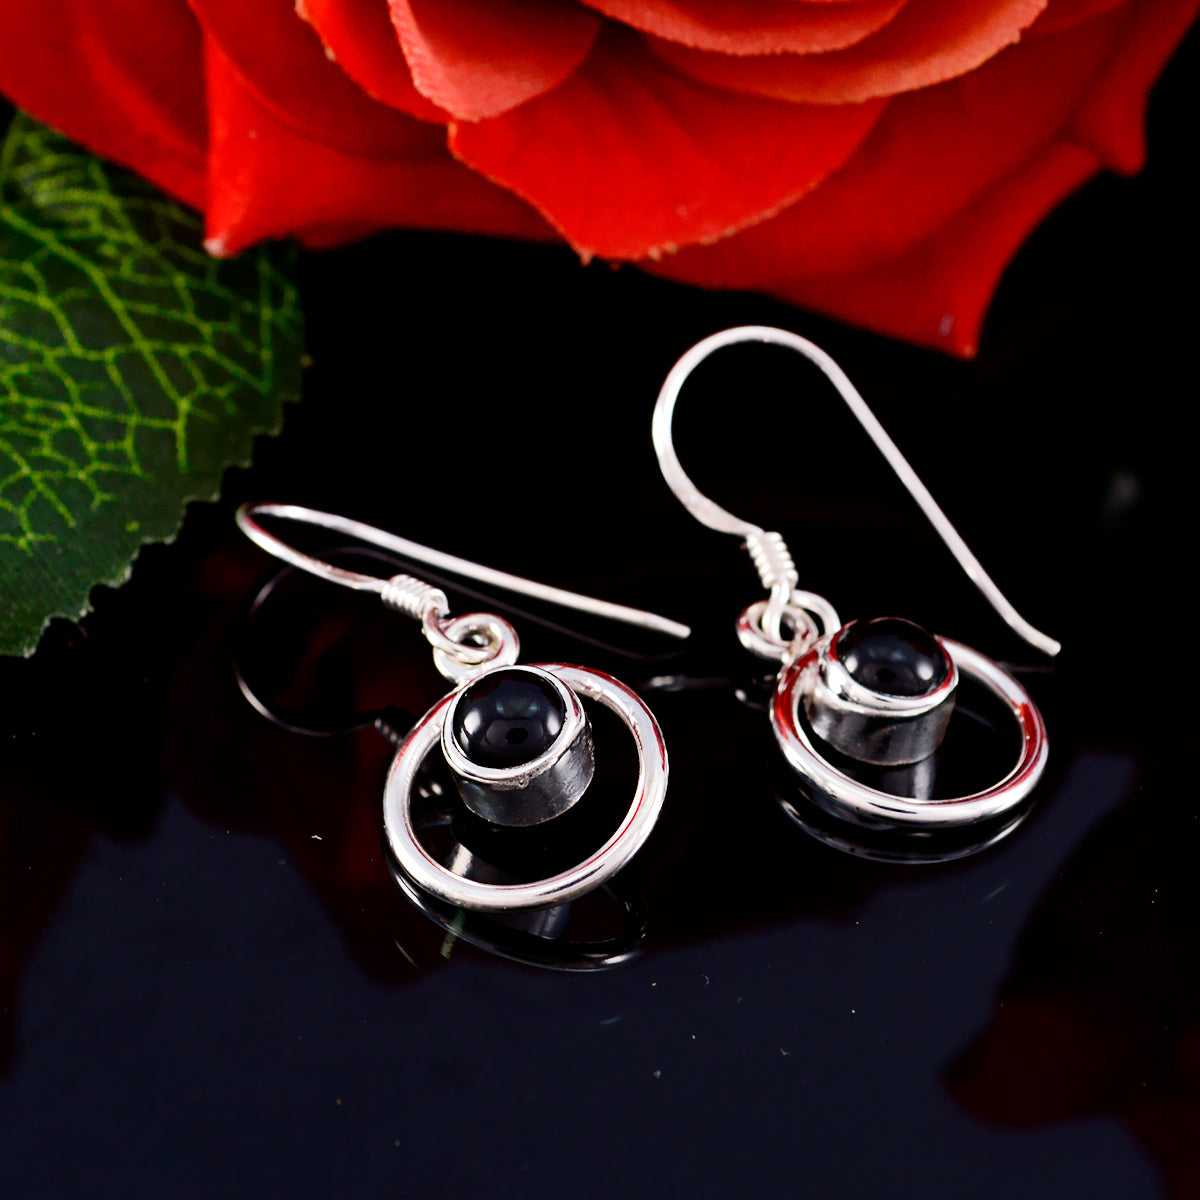 Riyo Real Gemstones round Cabochon Black Onyx Silver Earrings engagement gift